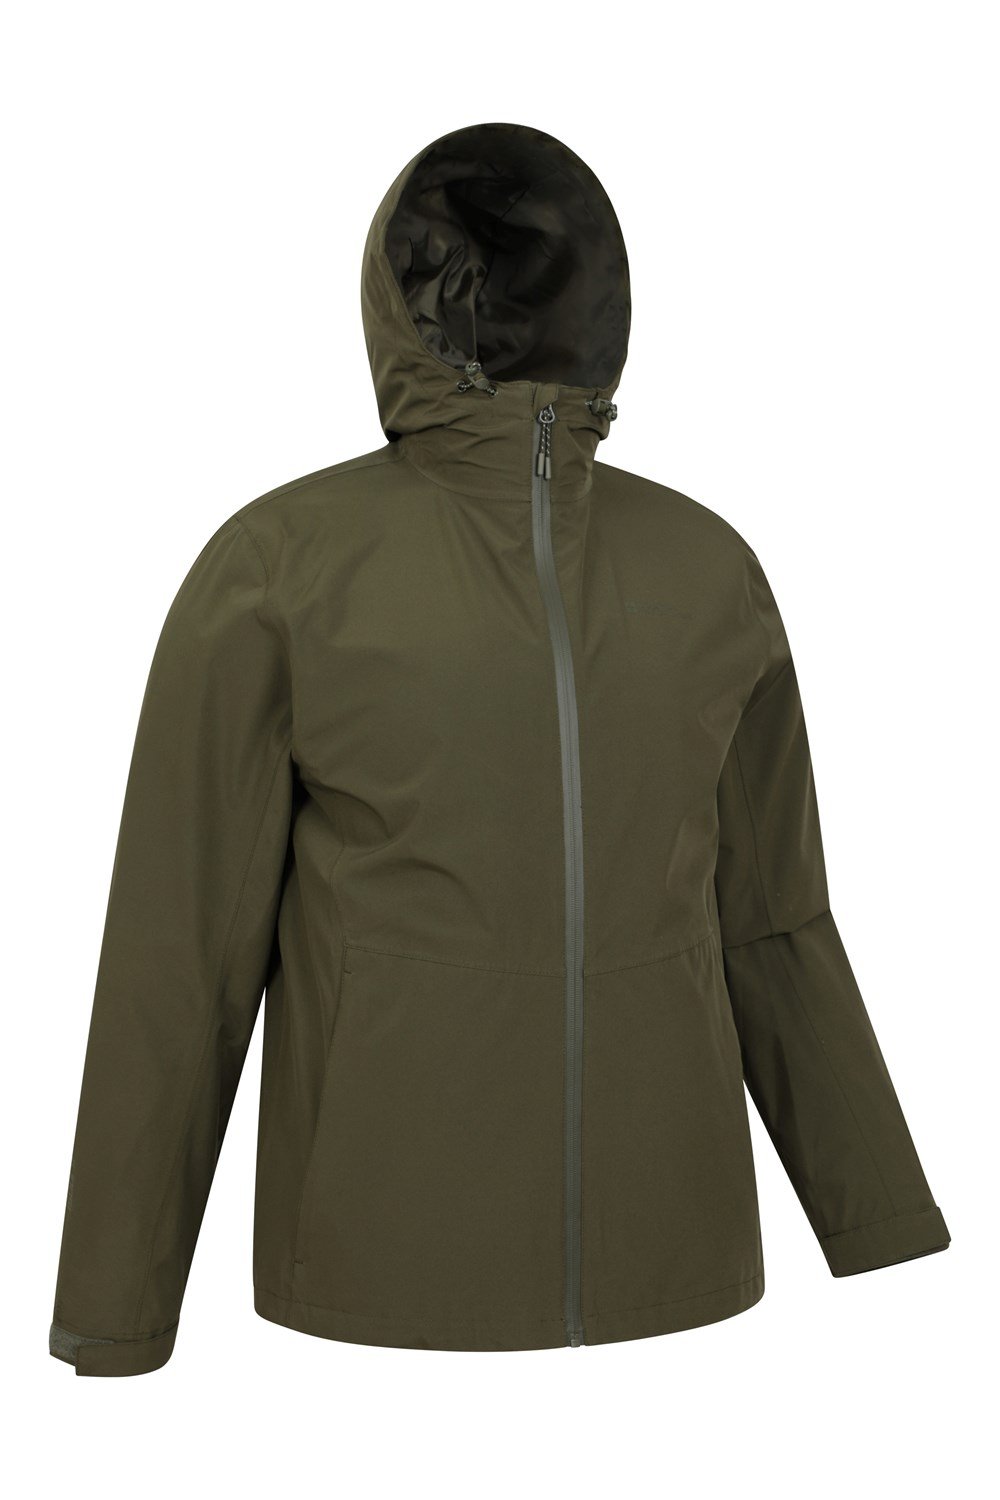 Mountain Warehouse Mens Covert Jacket Waterproof Breathable Rain